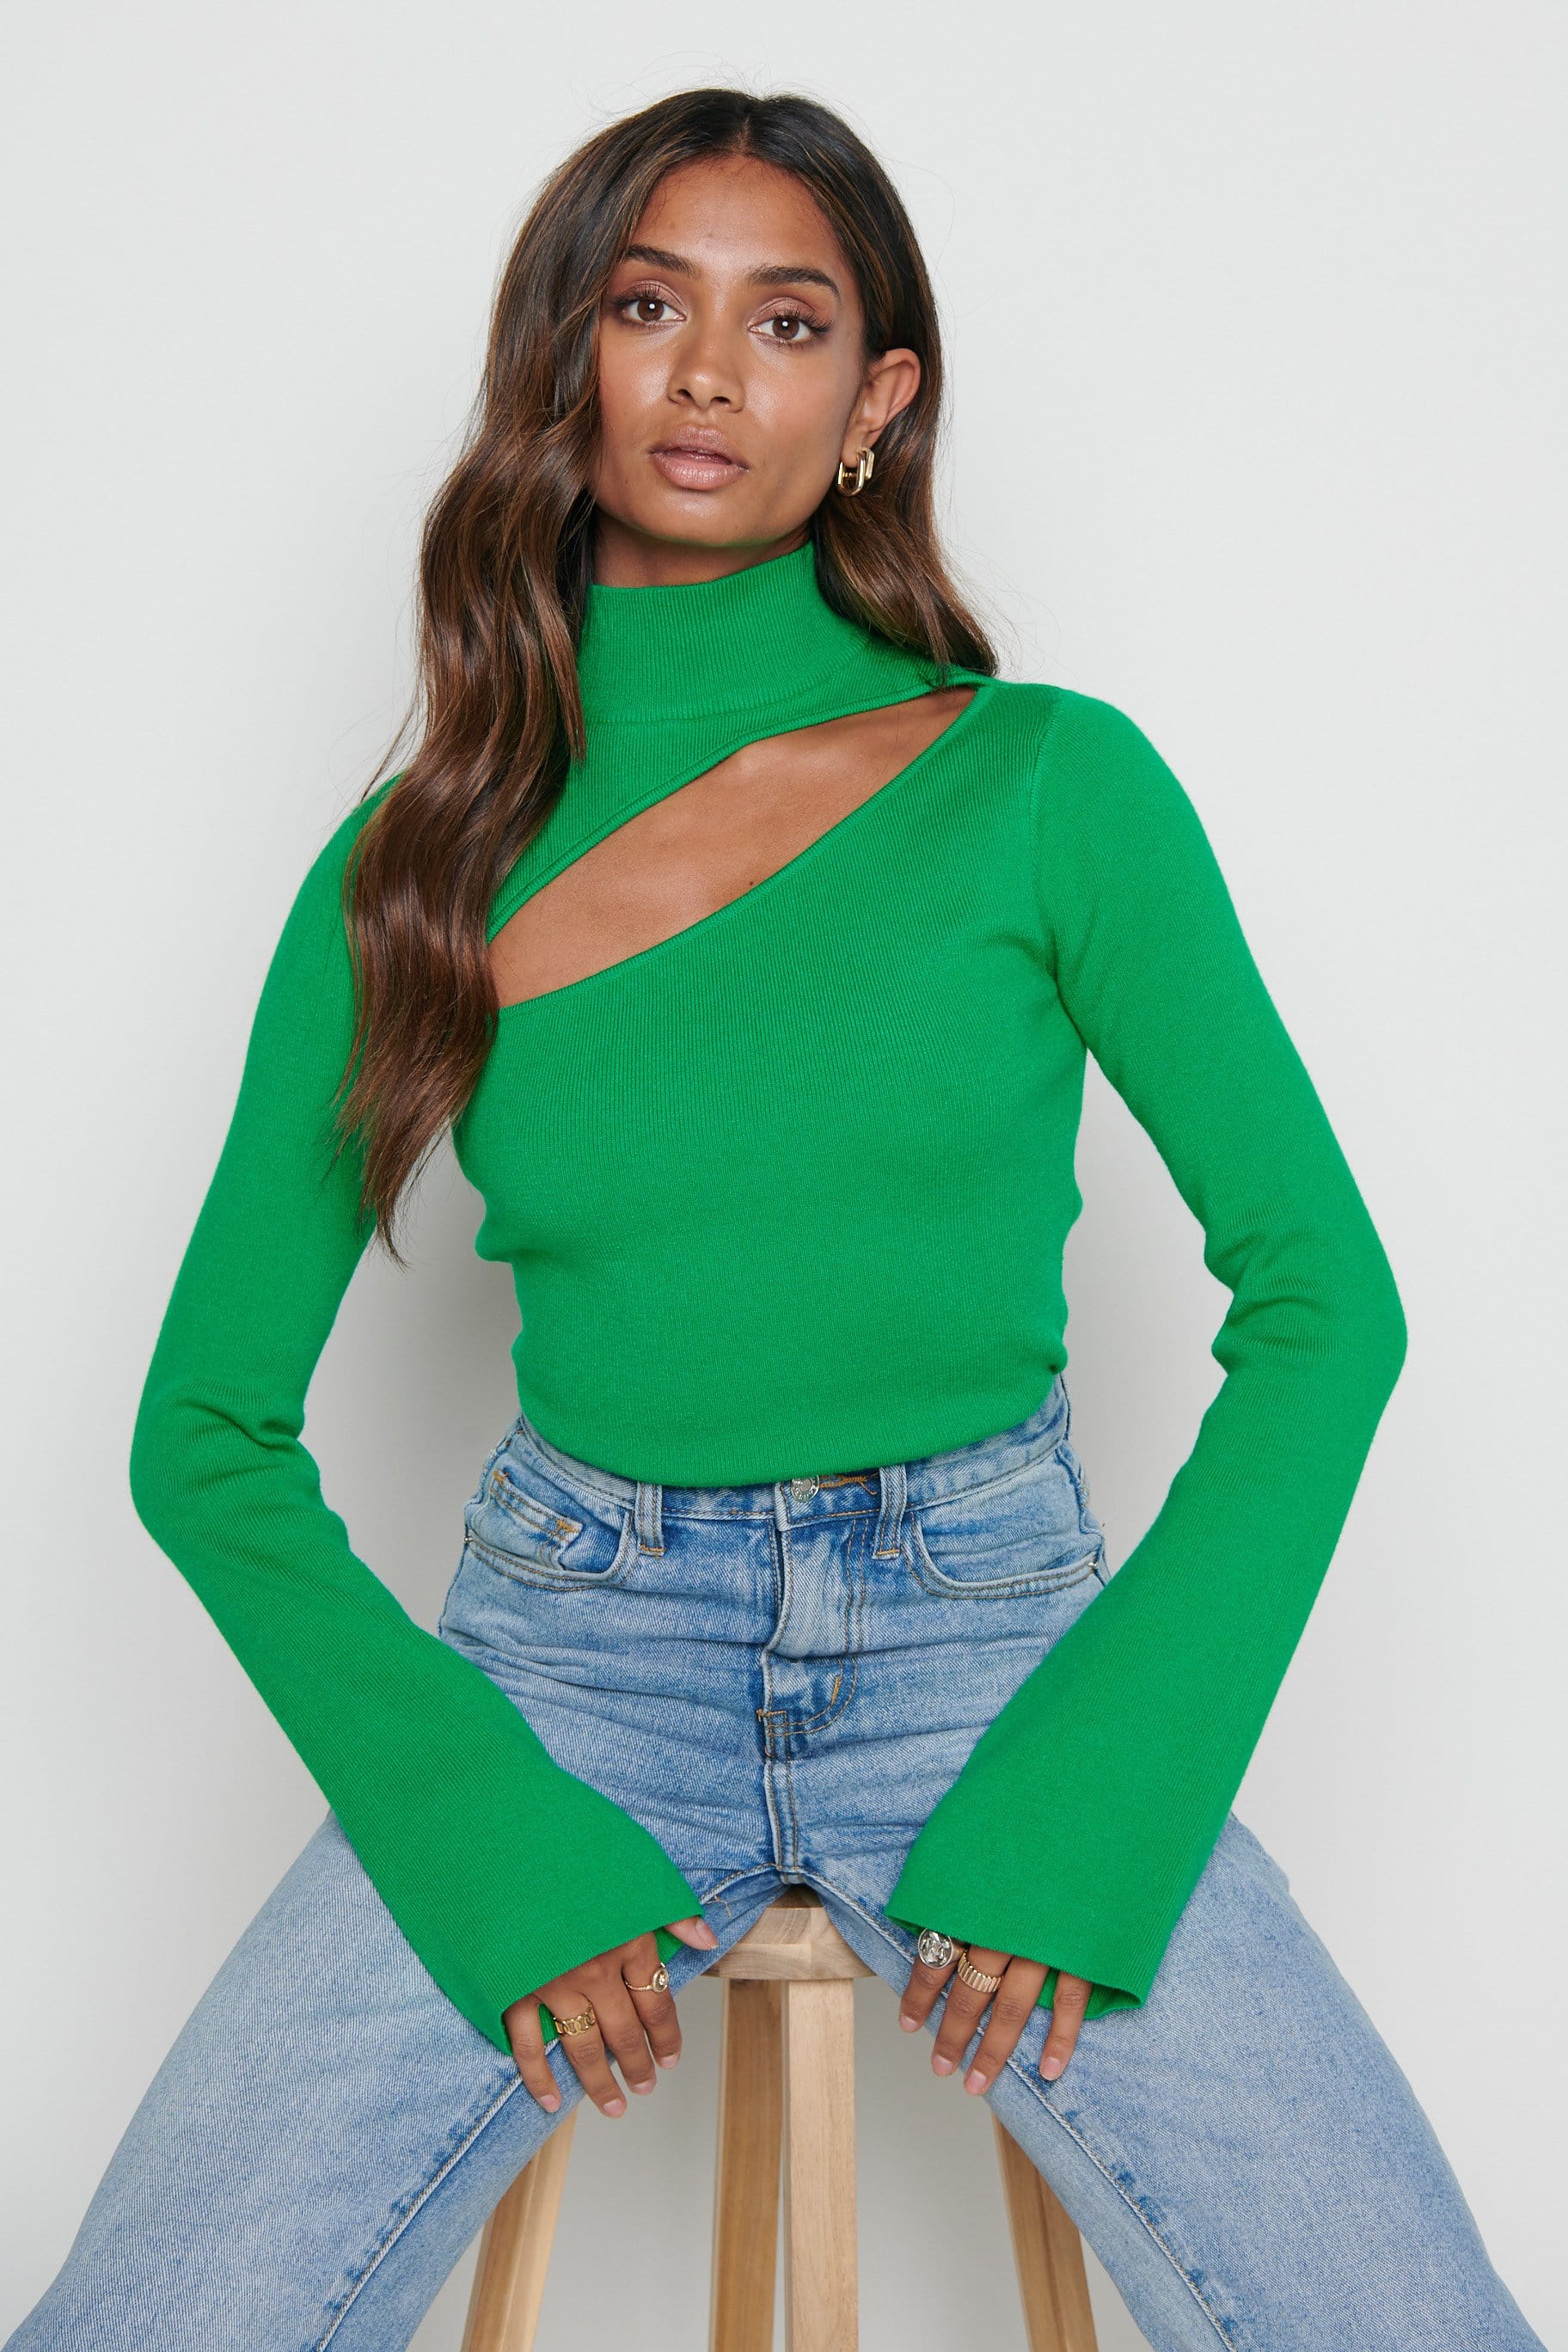 Shani Cut Out Knit Top - Bright Emerald, XXL